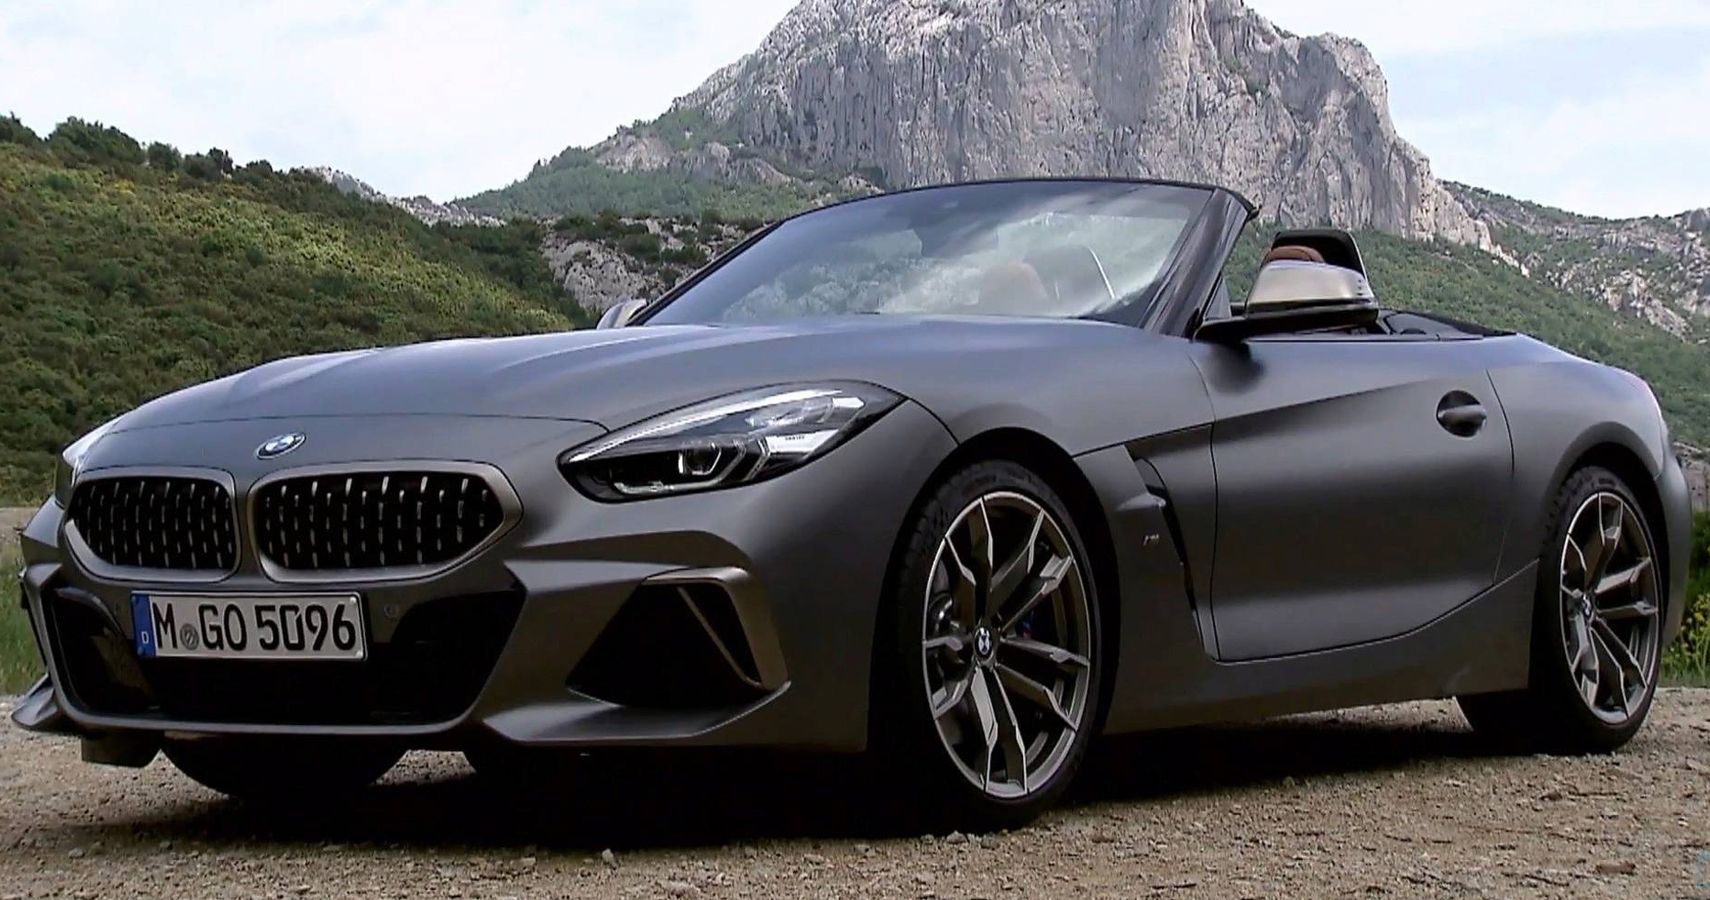 brydning kantsten Prevail 10 Of The Best BMW Car Models On The Market